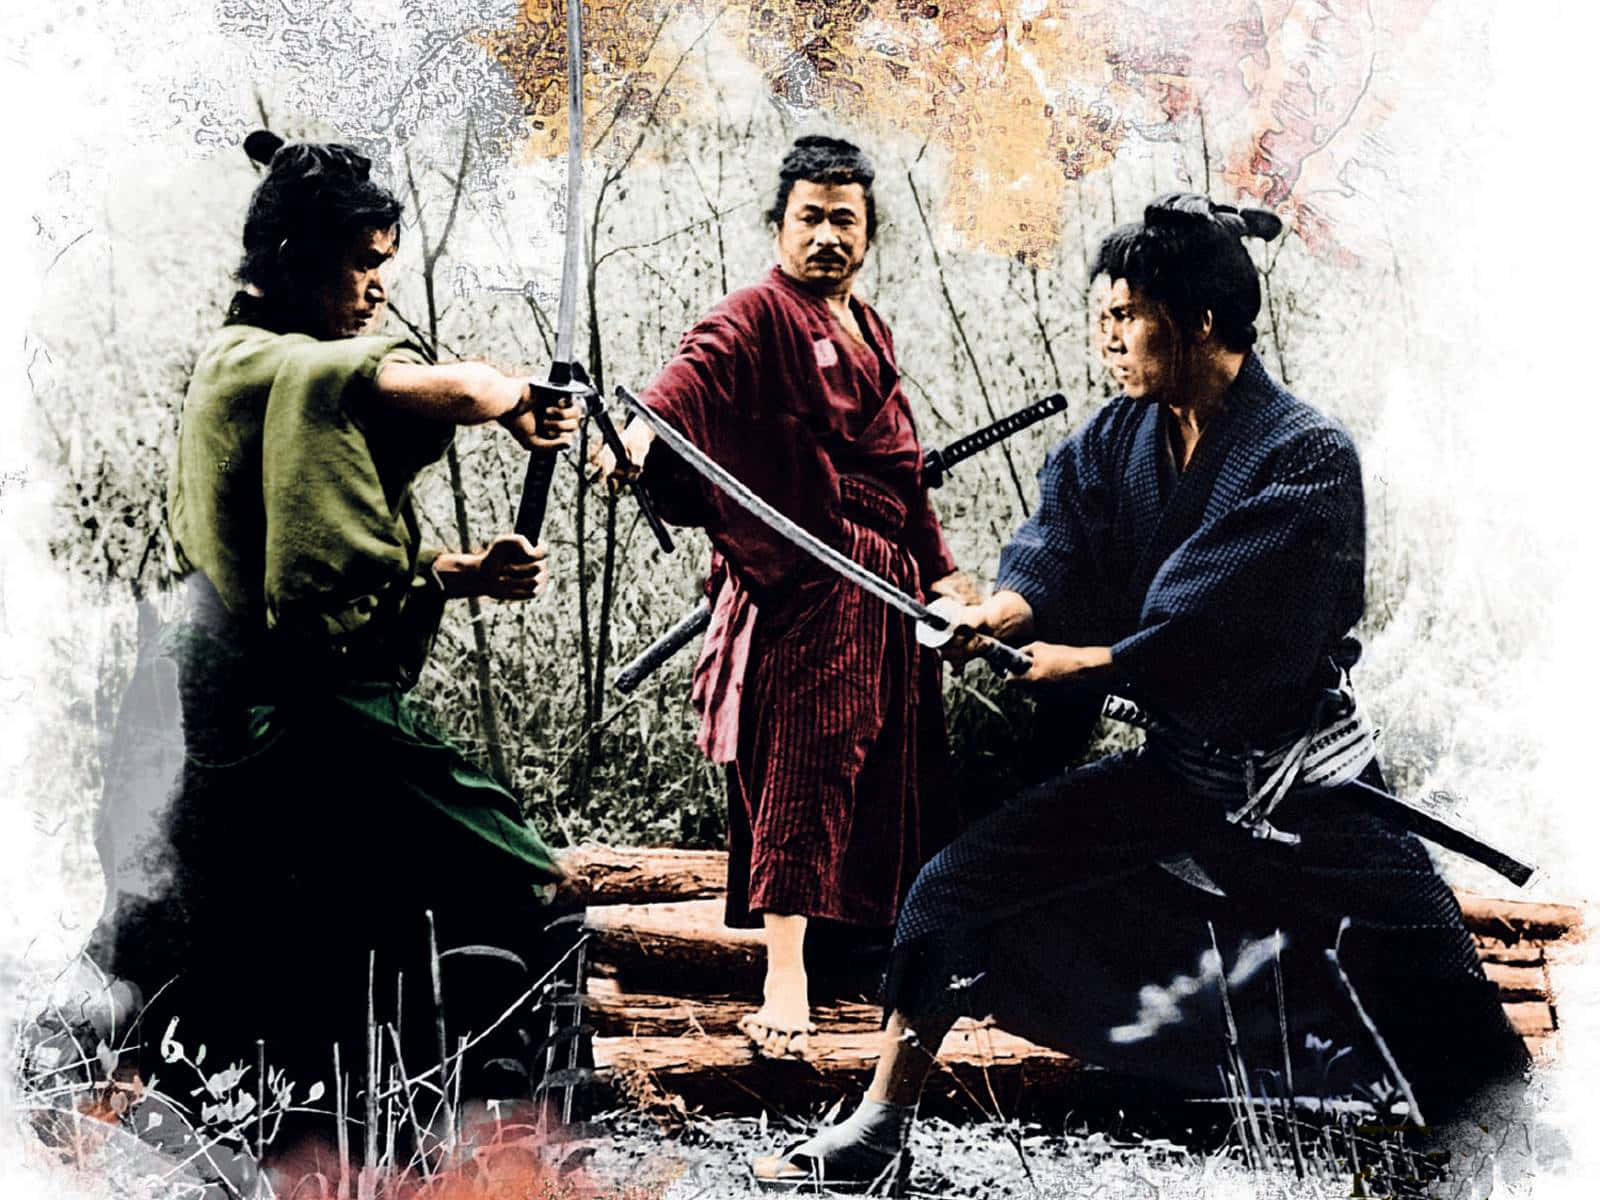 Captivating Samurai Scene in a Movie Wallpaper